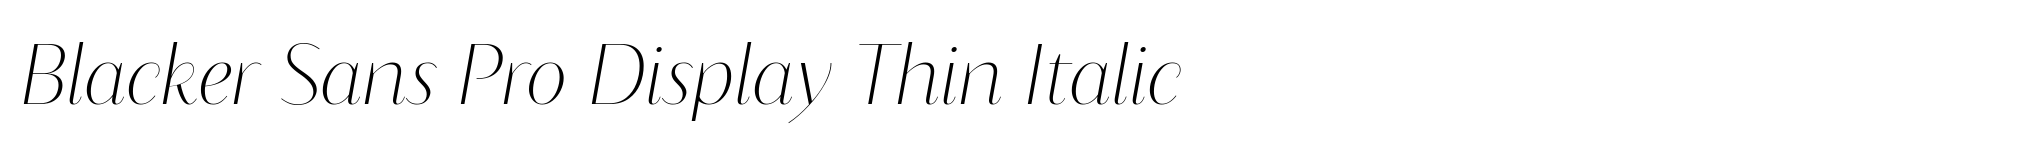 Blacker Sans Pro Display Thin Italic image